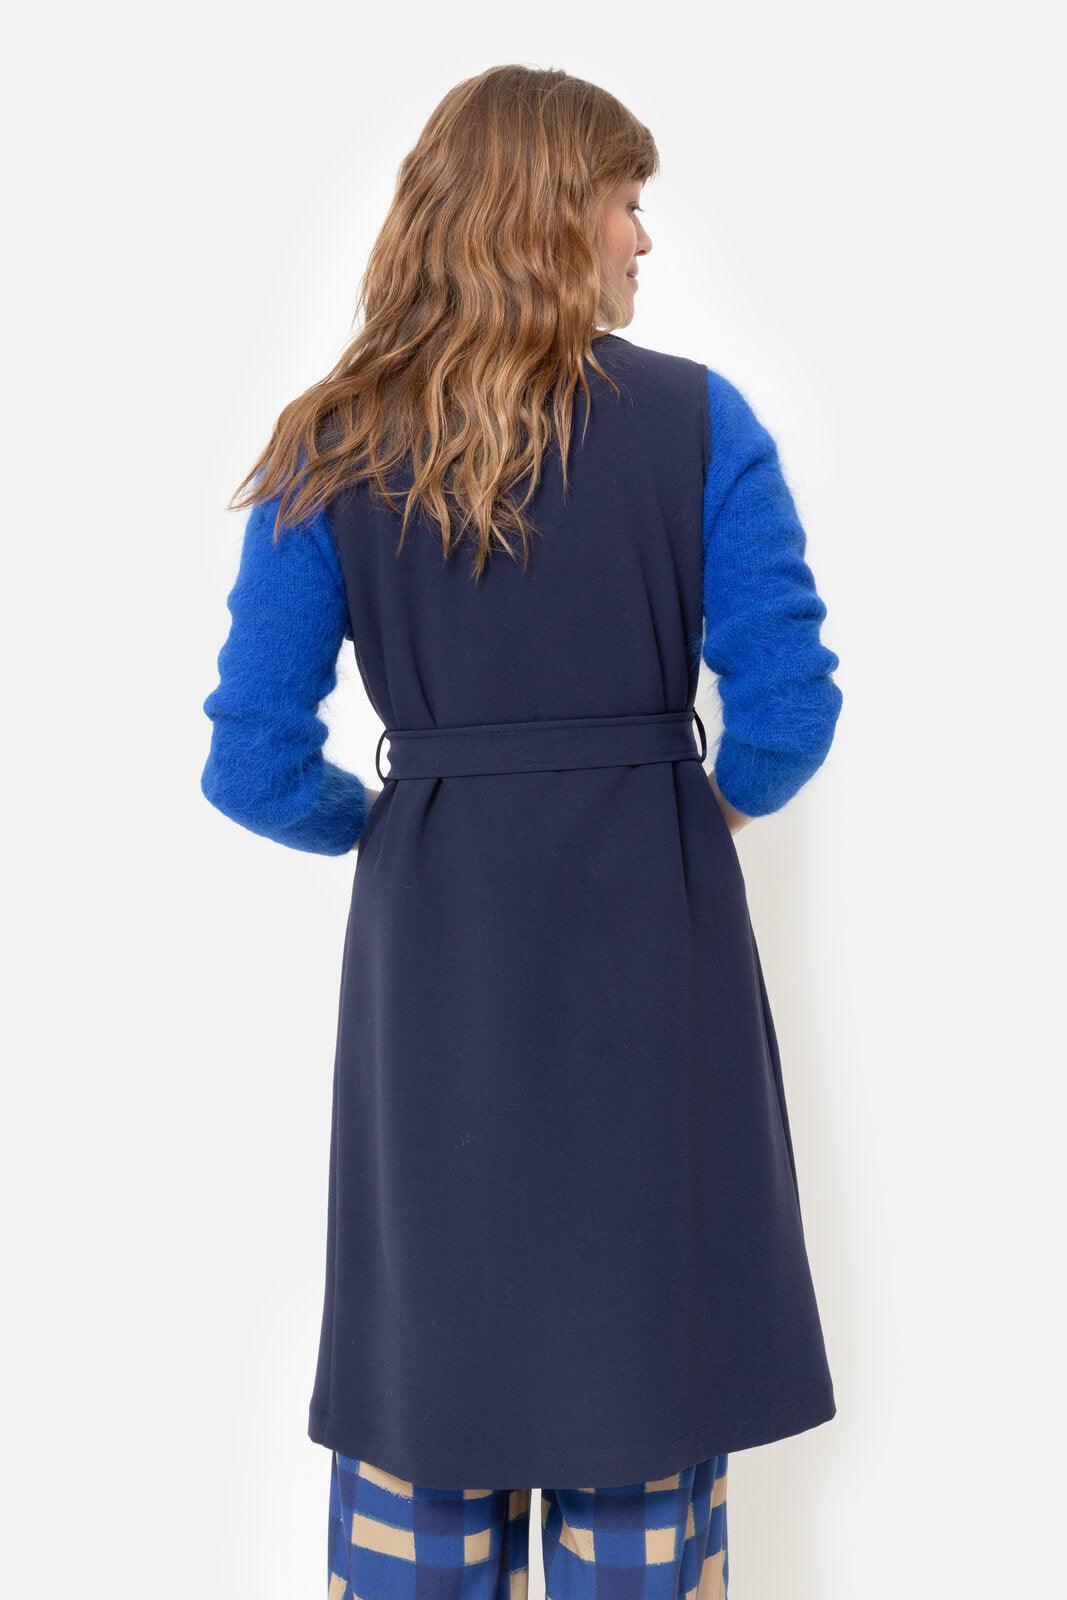 Giletvest Marine Terre Bleue ( Oona/575 ) - Delaere Womenswear